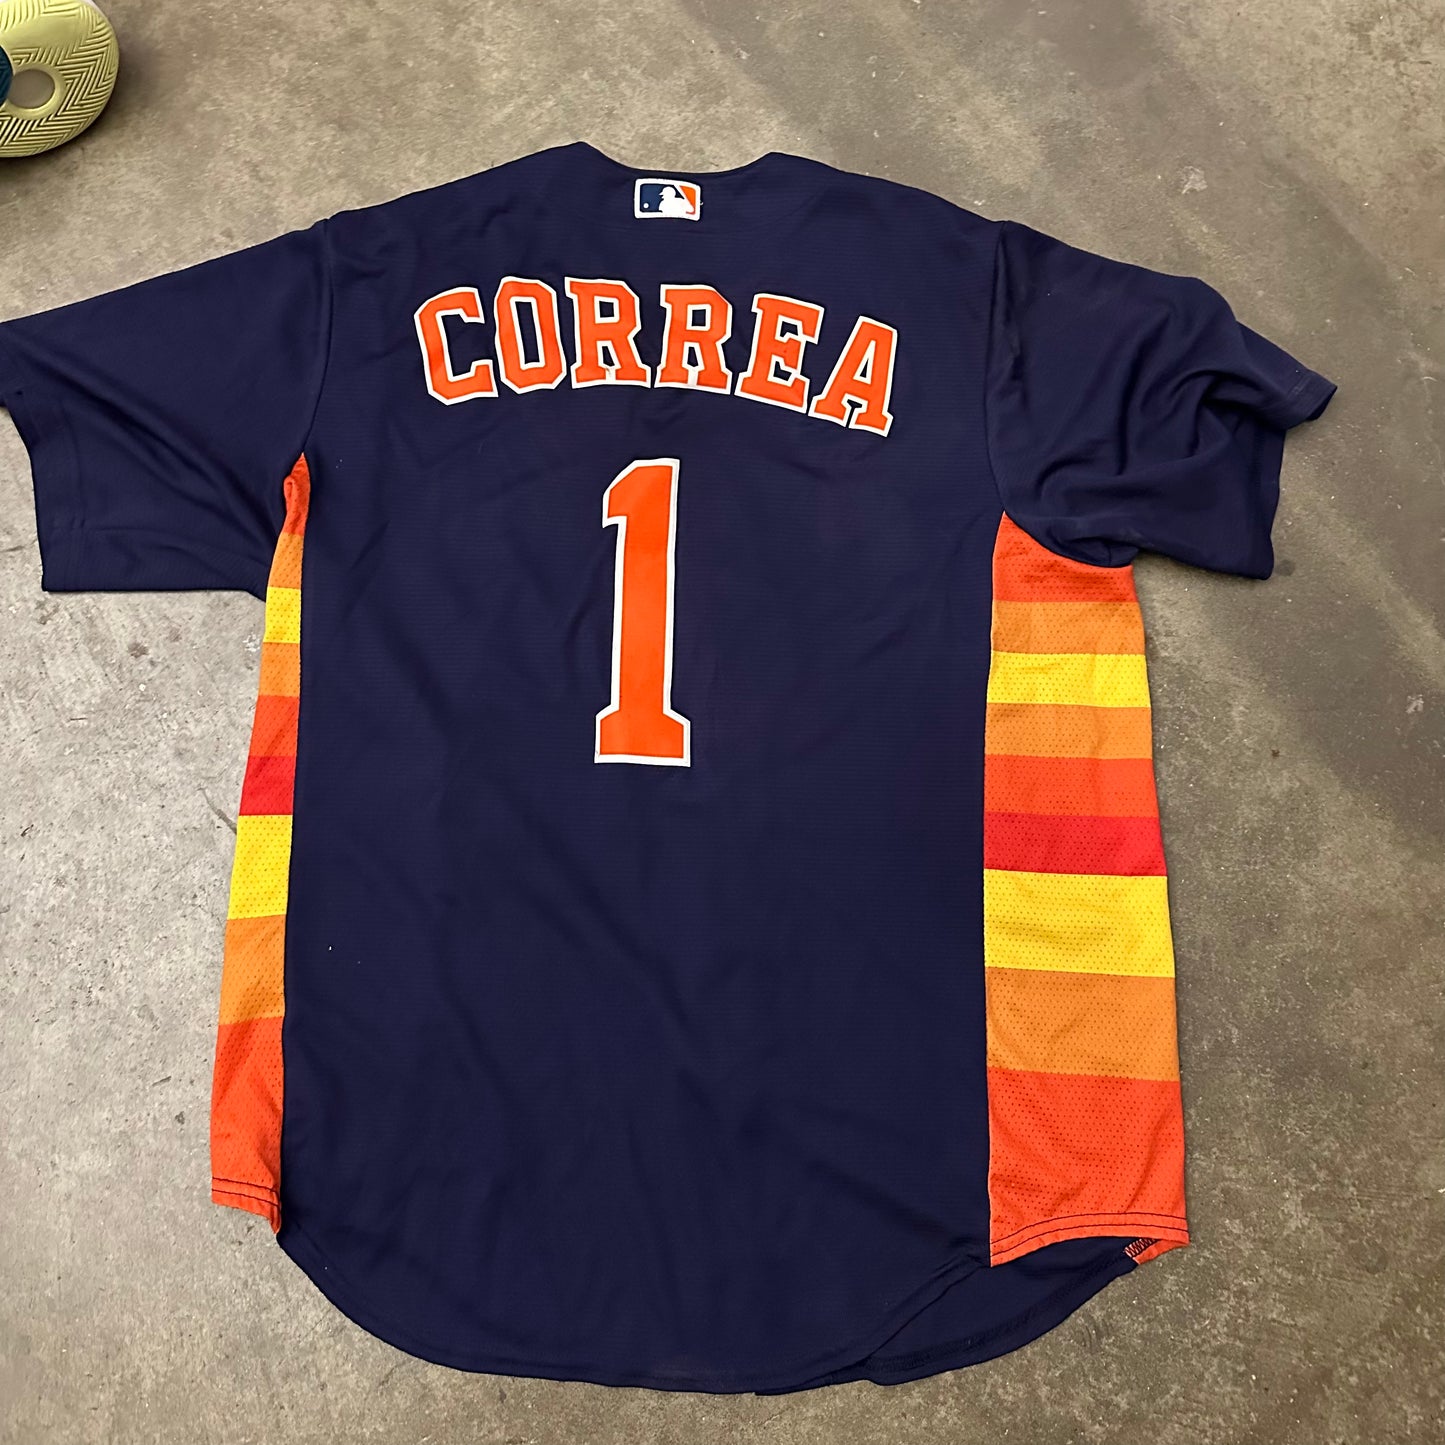 Correa Astros Jersey Size L (Trusted Club) (HOU)